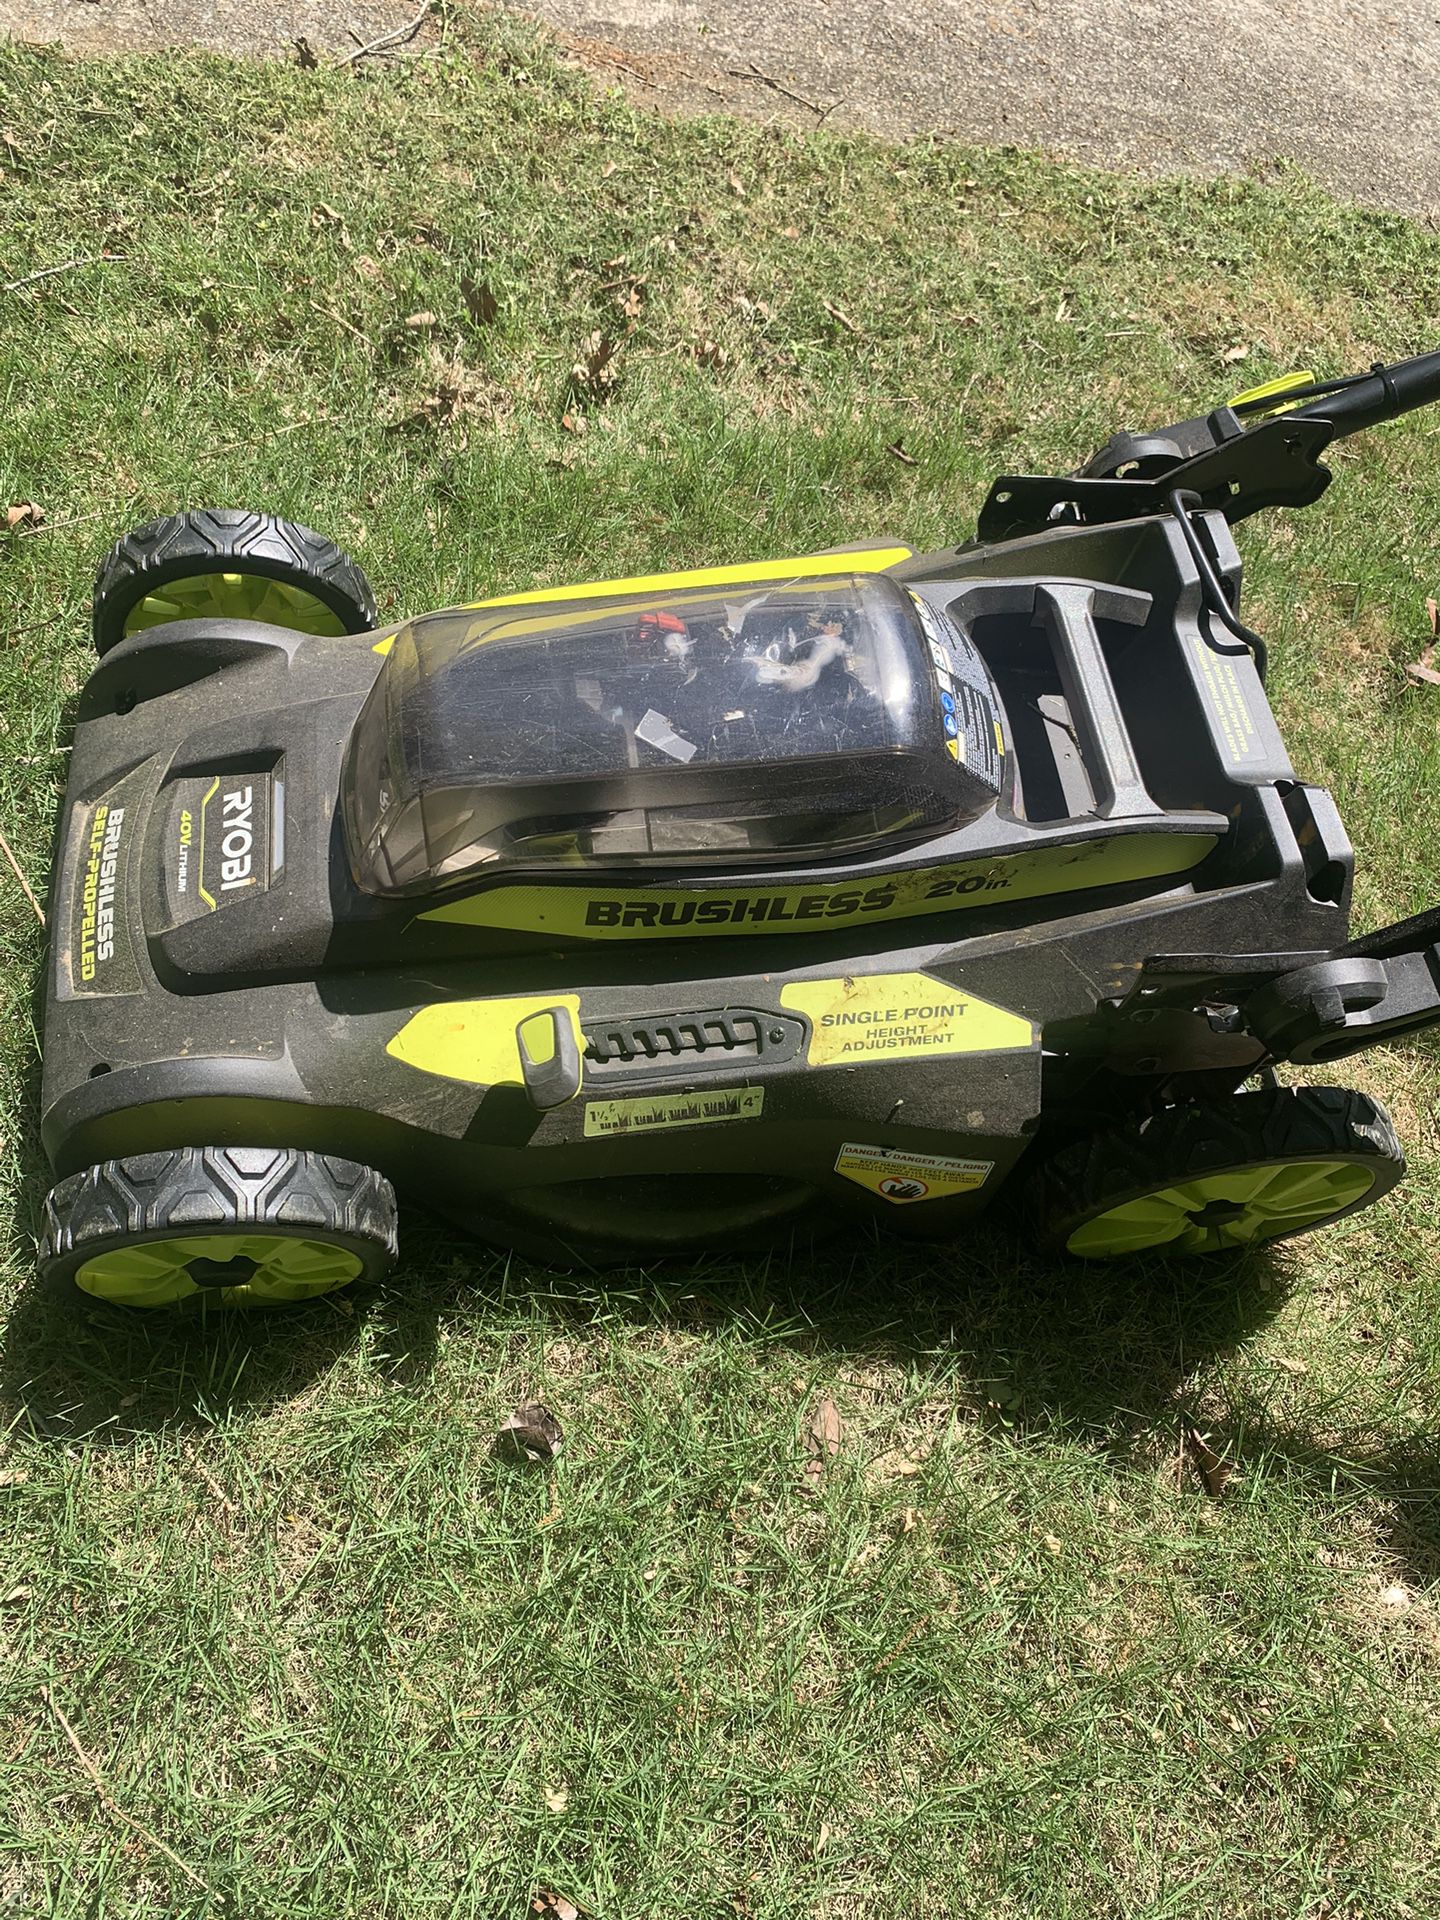 RYOBI 20” Self-propelled Cordless Lawnmower / Lawn Mower 